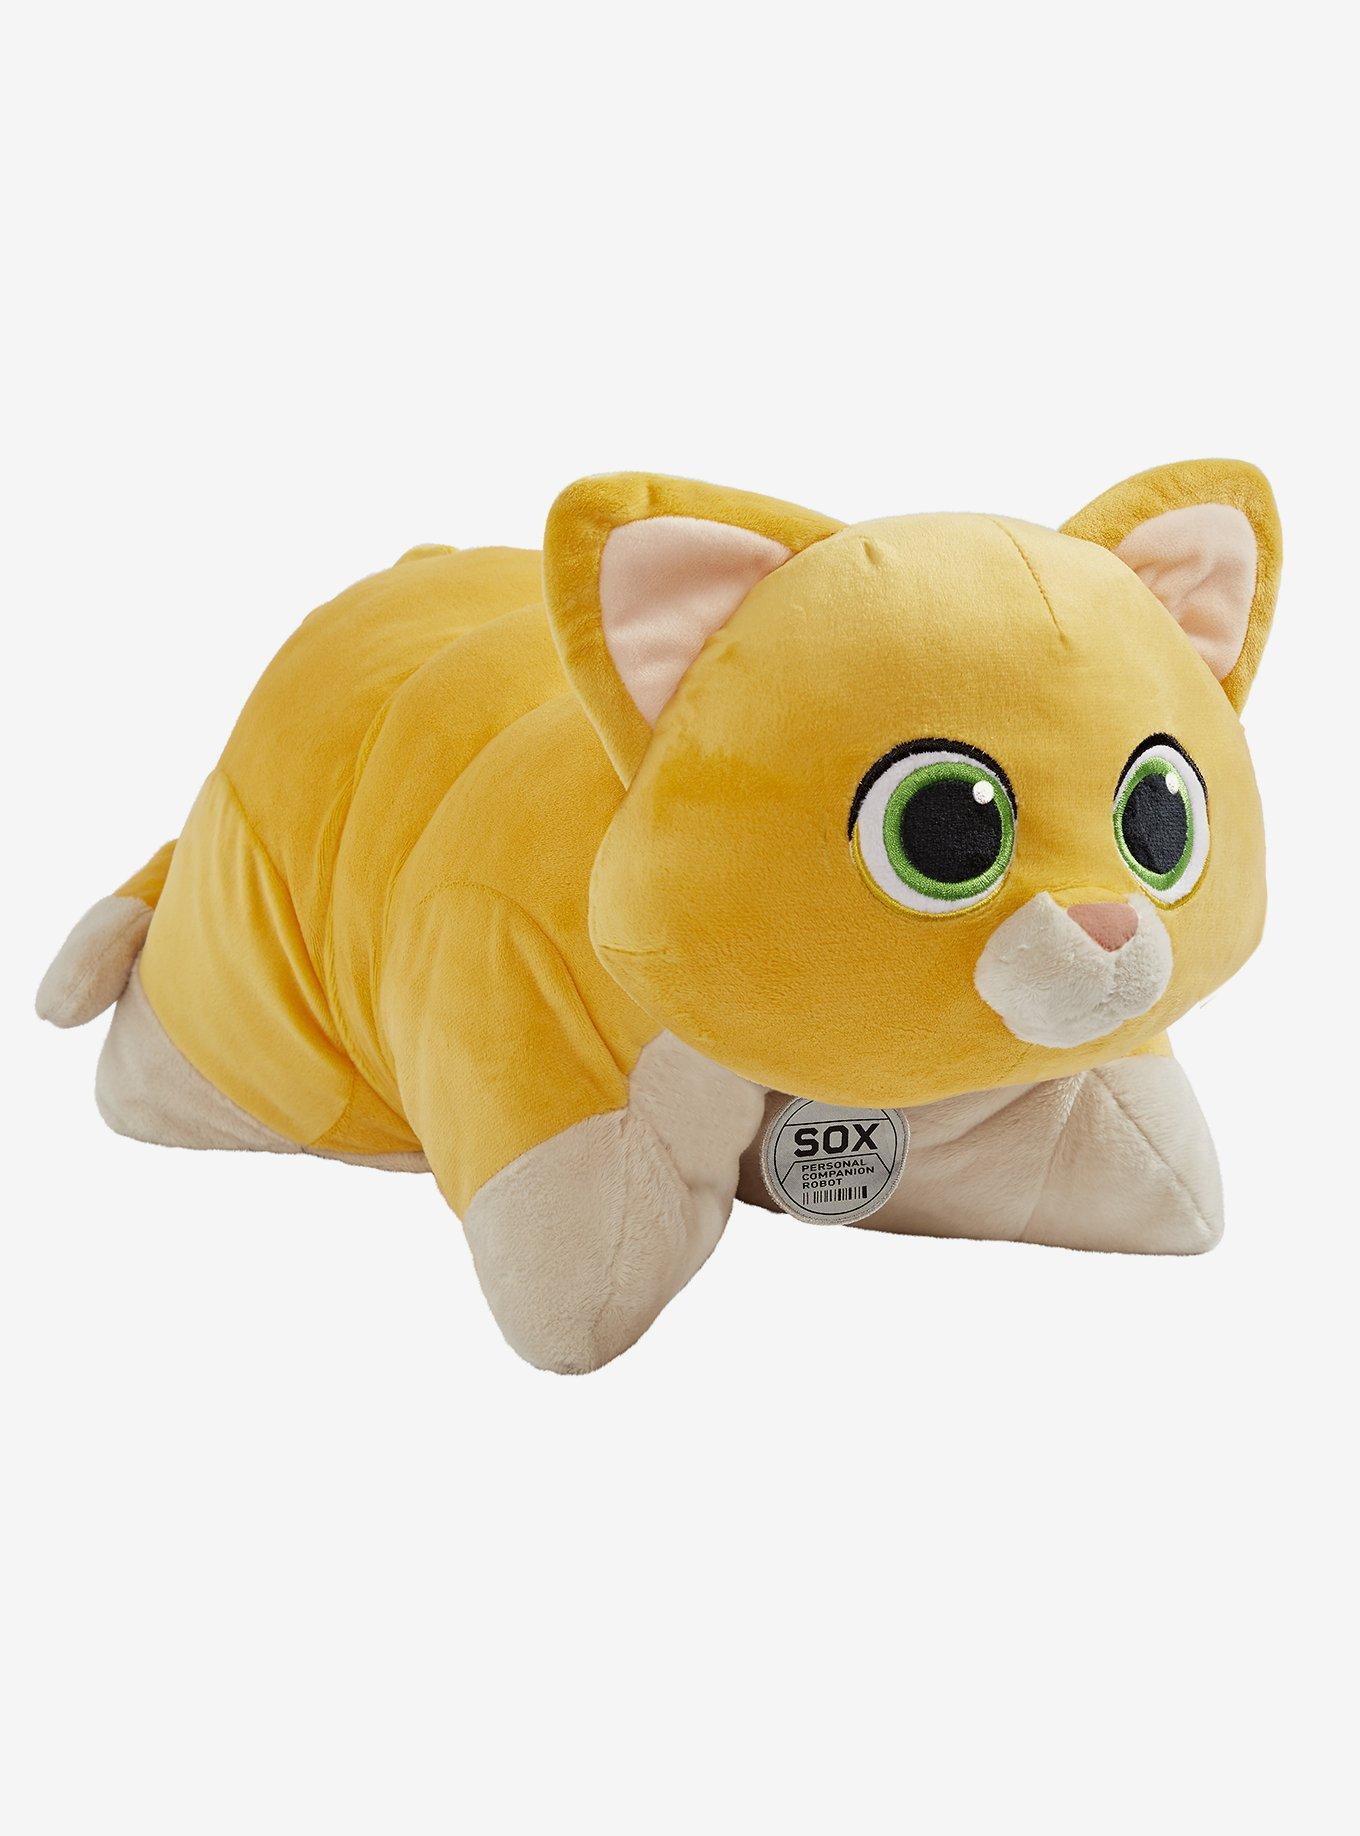 Disney Pixar Lightyear Sox The Cat Pillow Pets Plush Toy